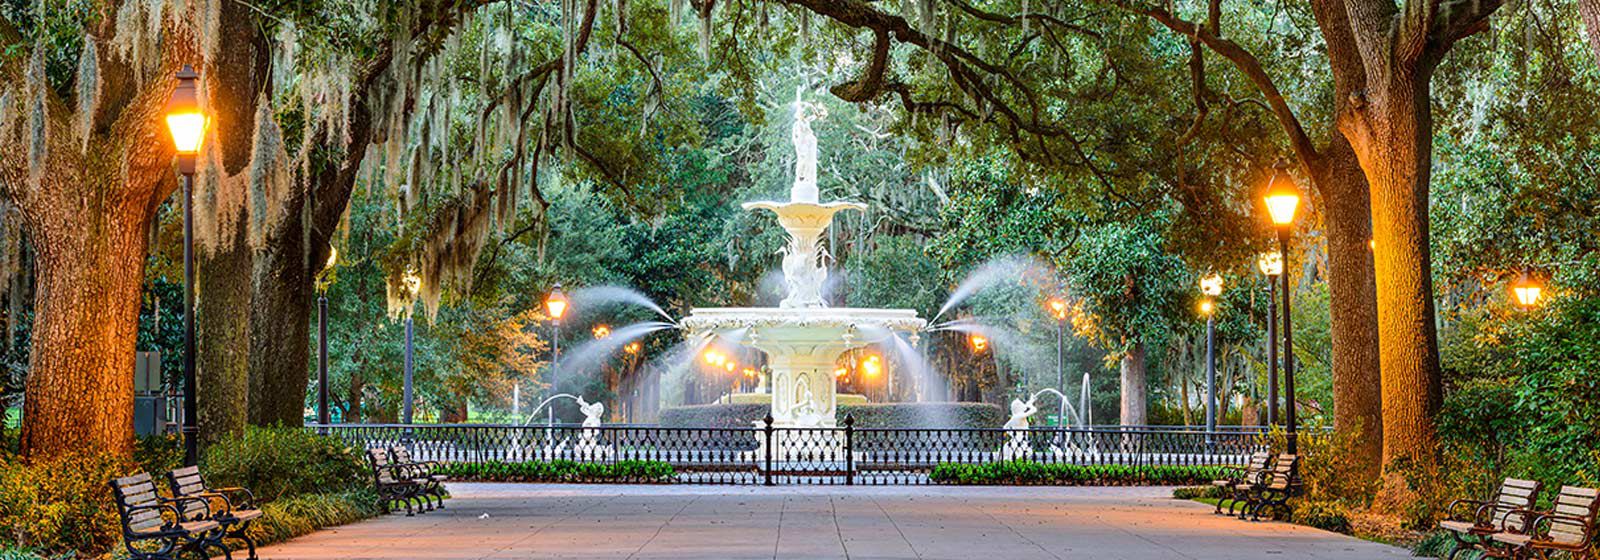 IHG's guide to historic Savannah